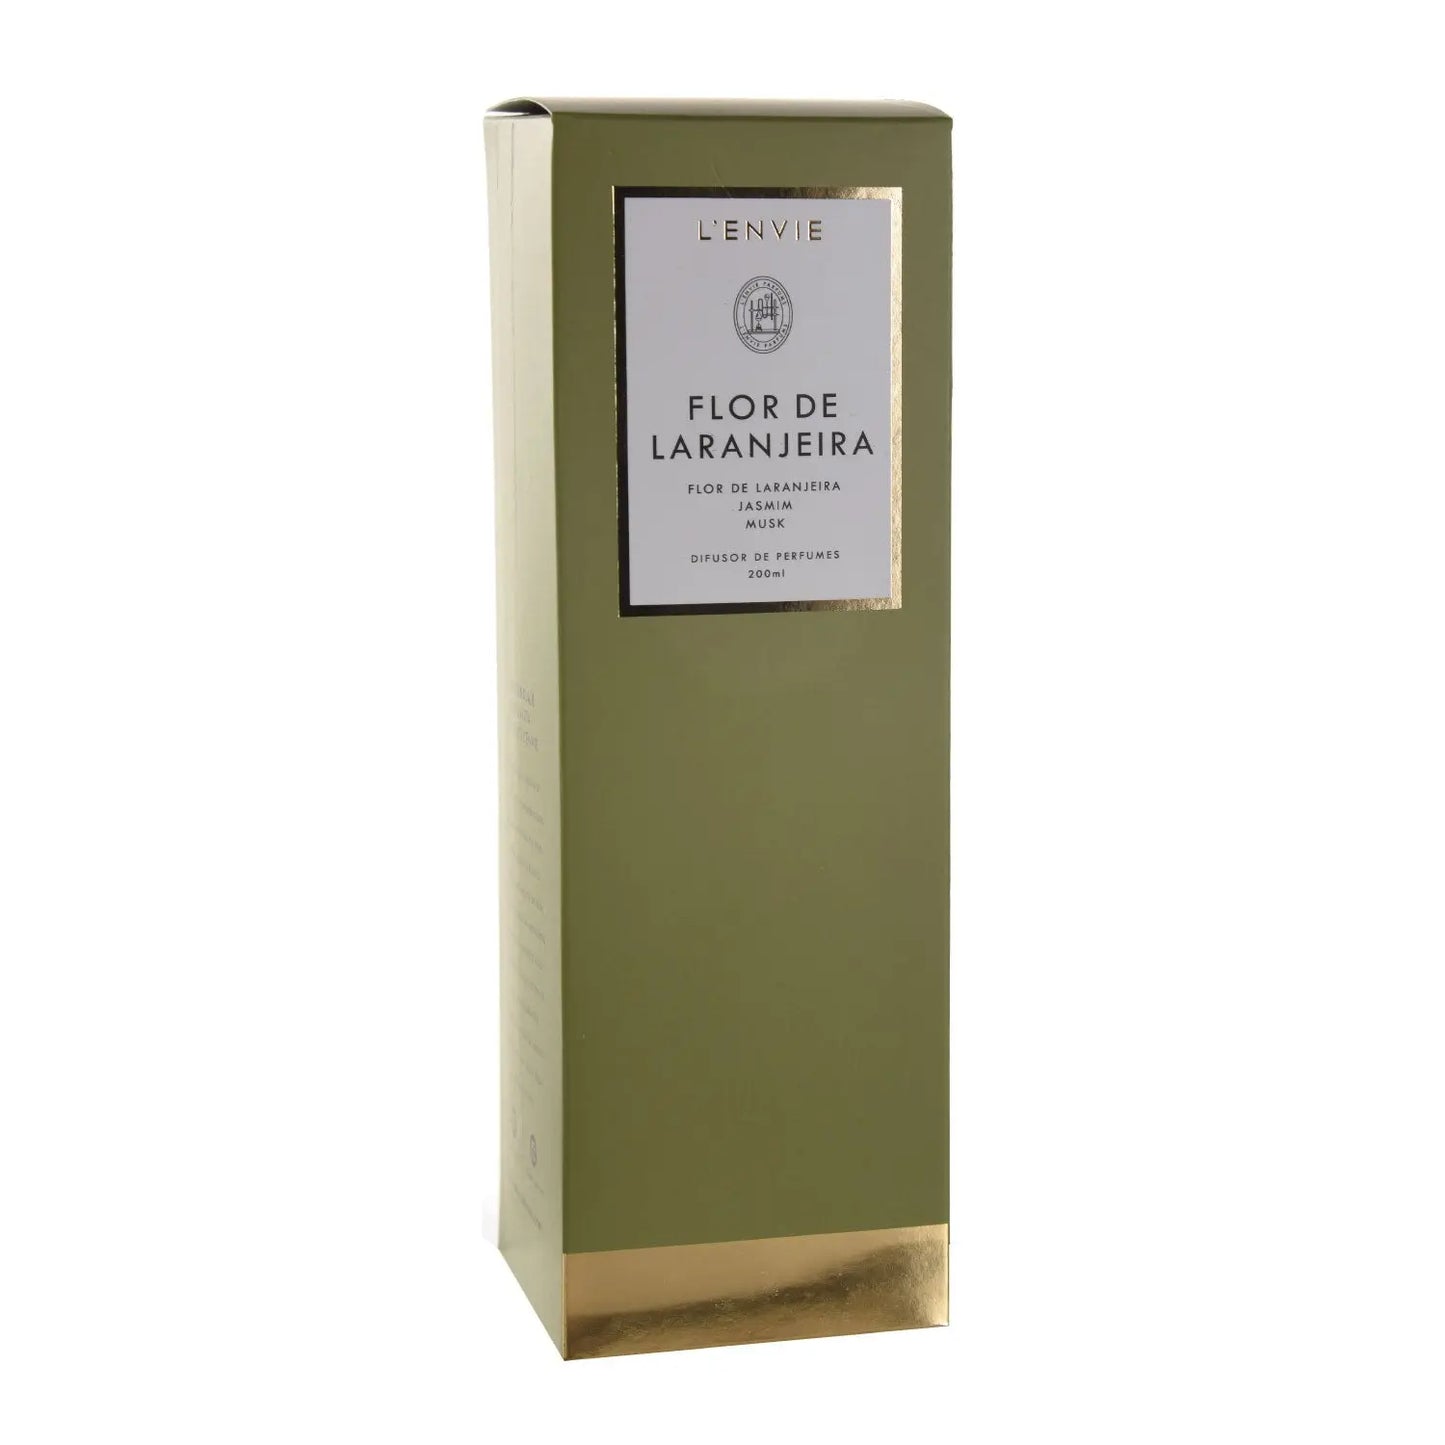 Homedock Difusor de Perfume Flor de Laranjeira - 200ml Lenvie